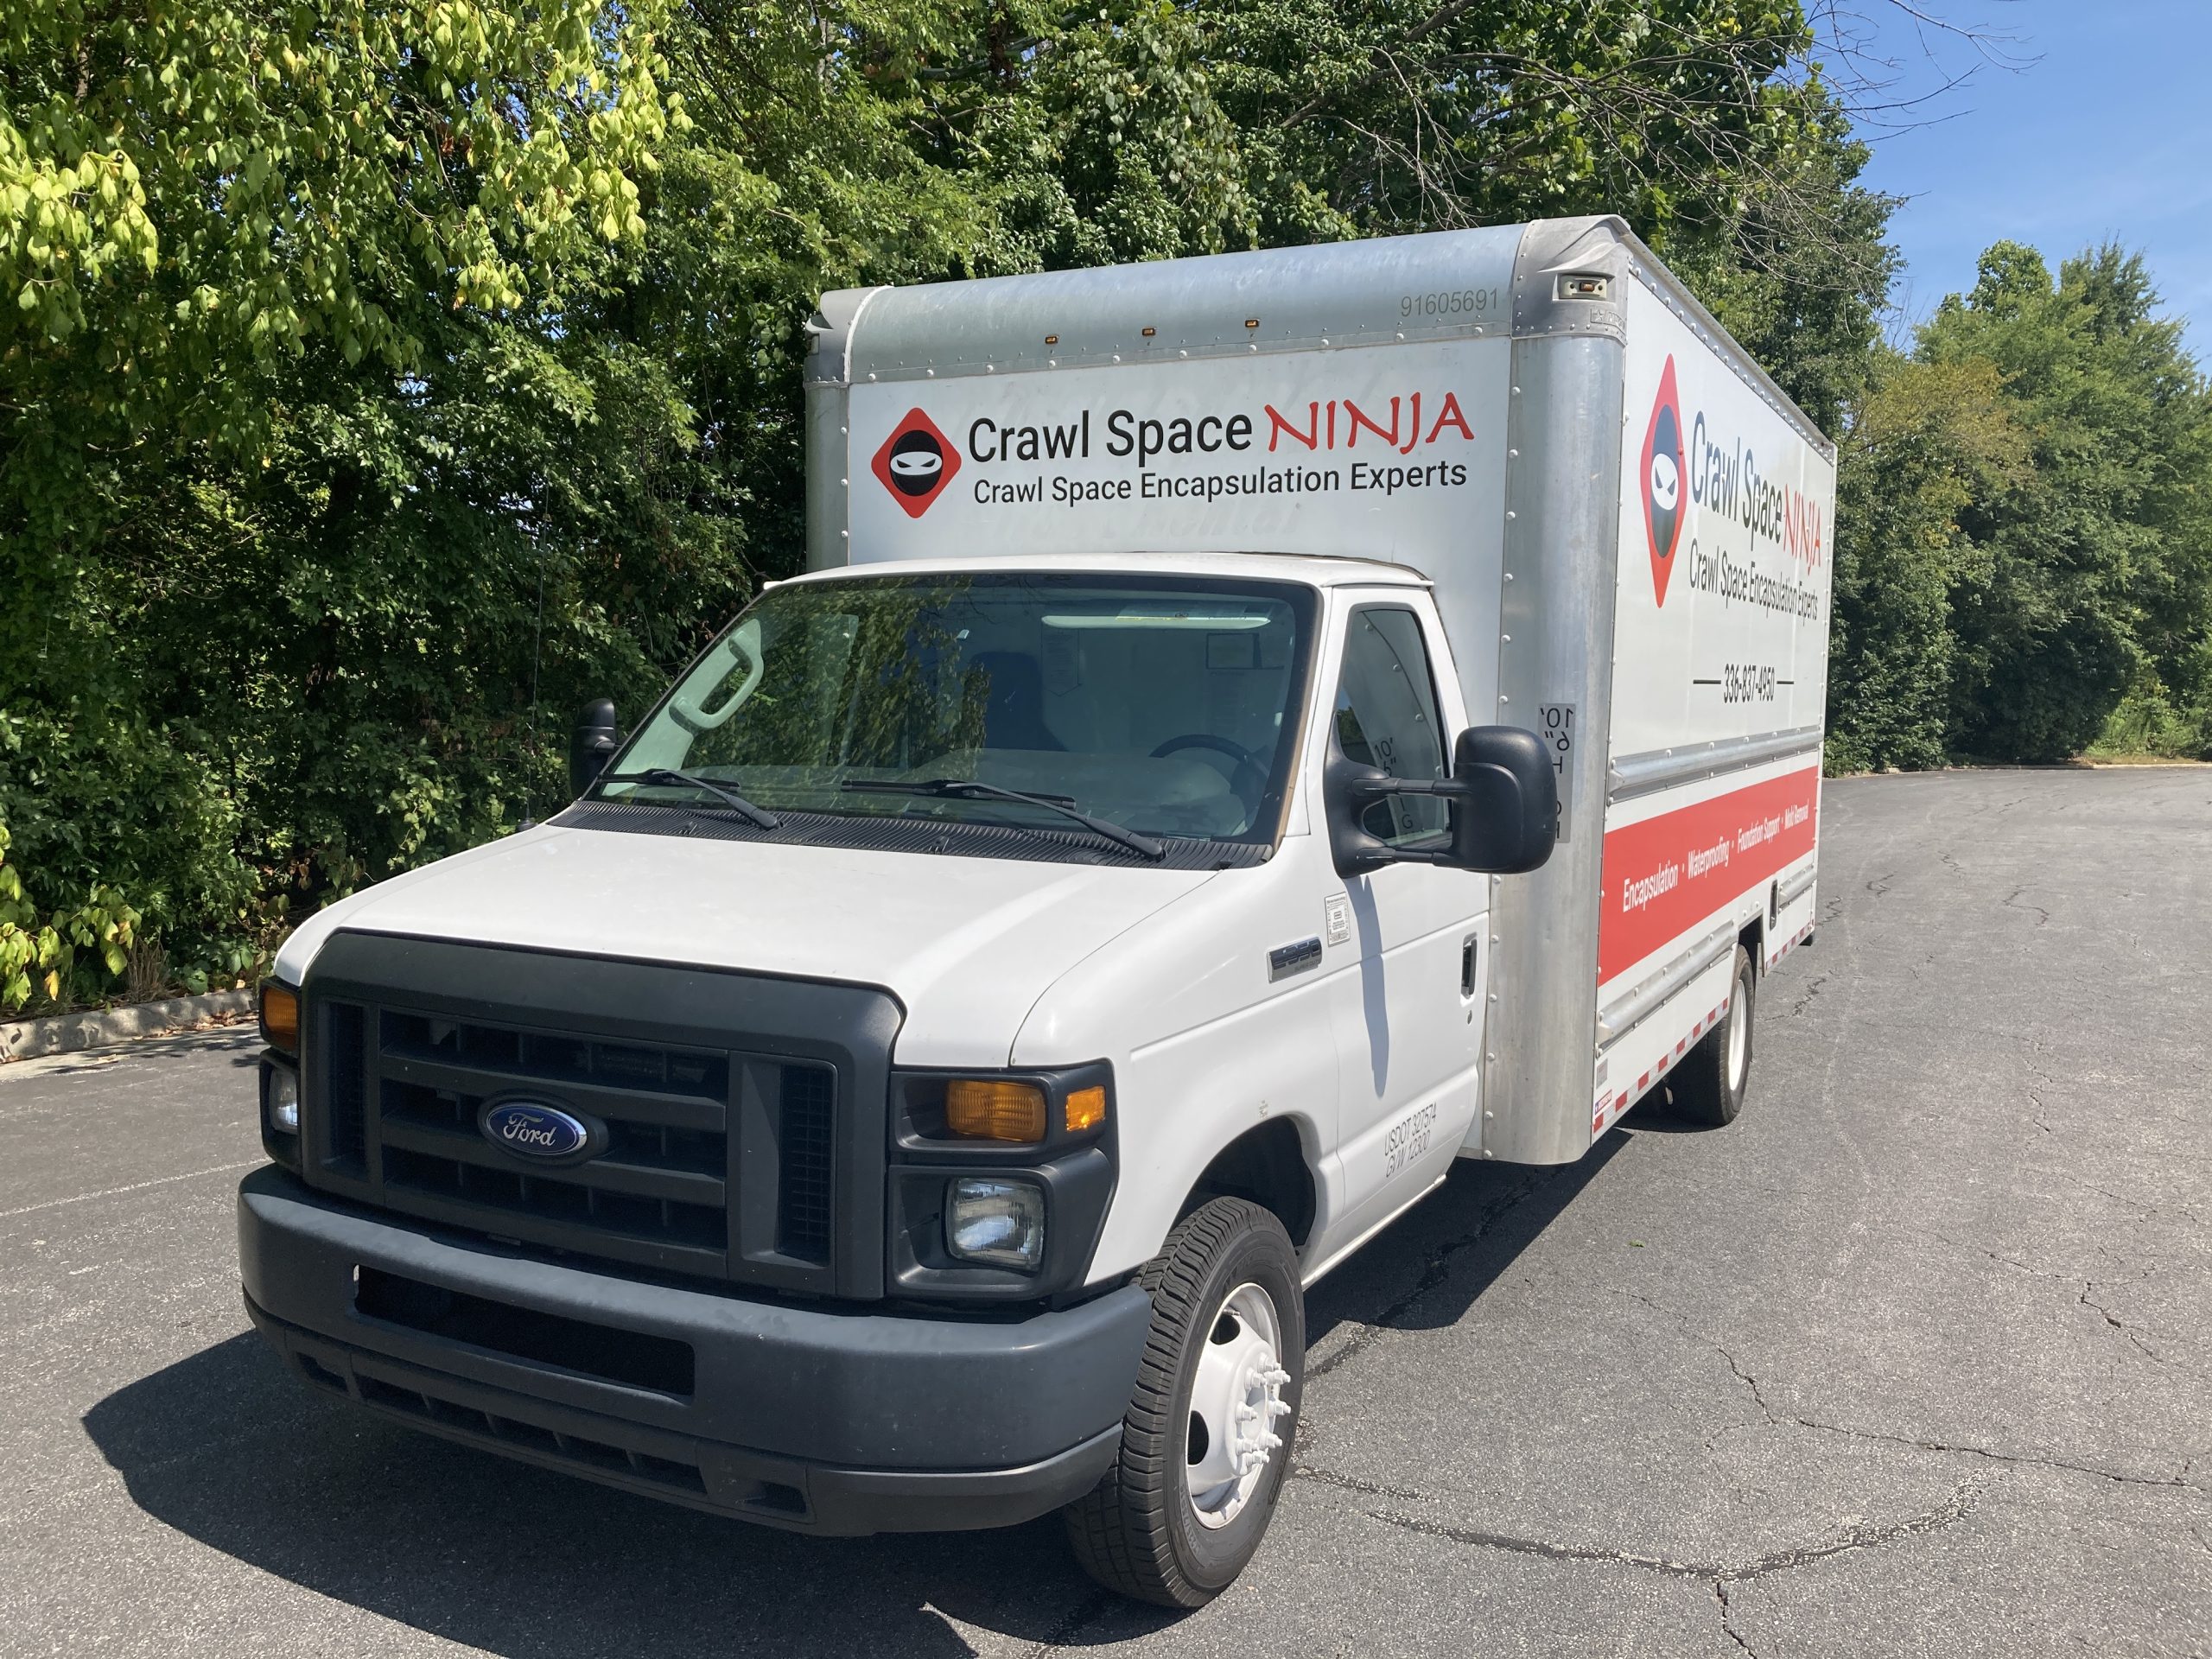 Crawl Space Ninja Custom Vehicle Wrap In Greensboro, NC - The Carolina Signsmith